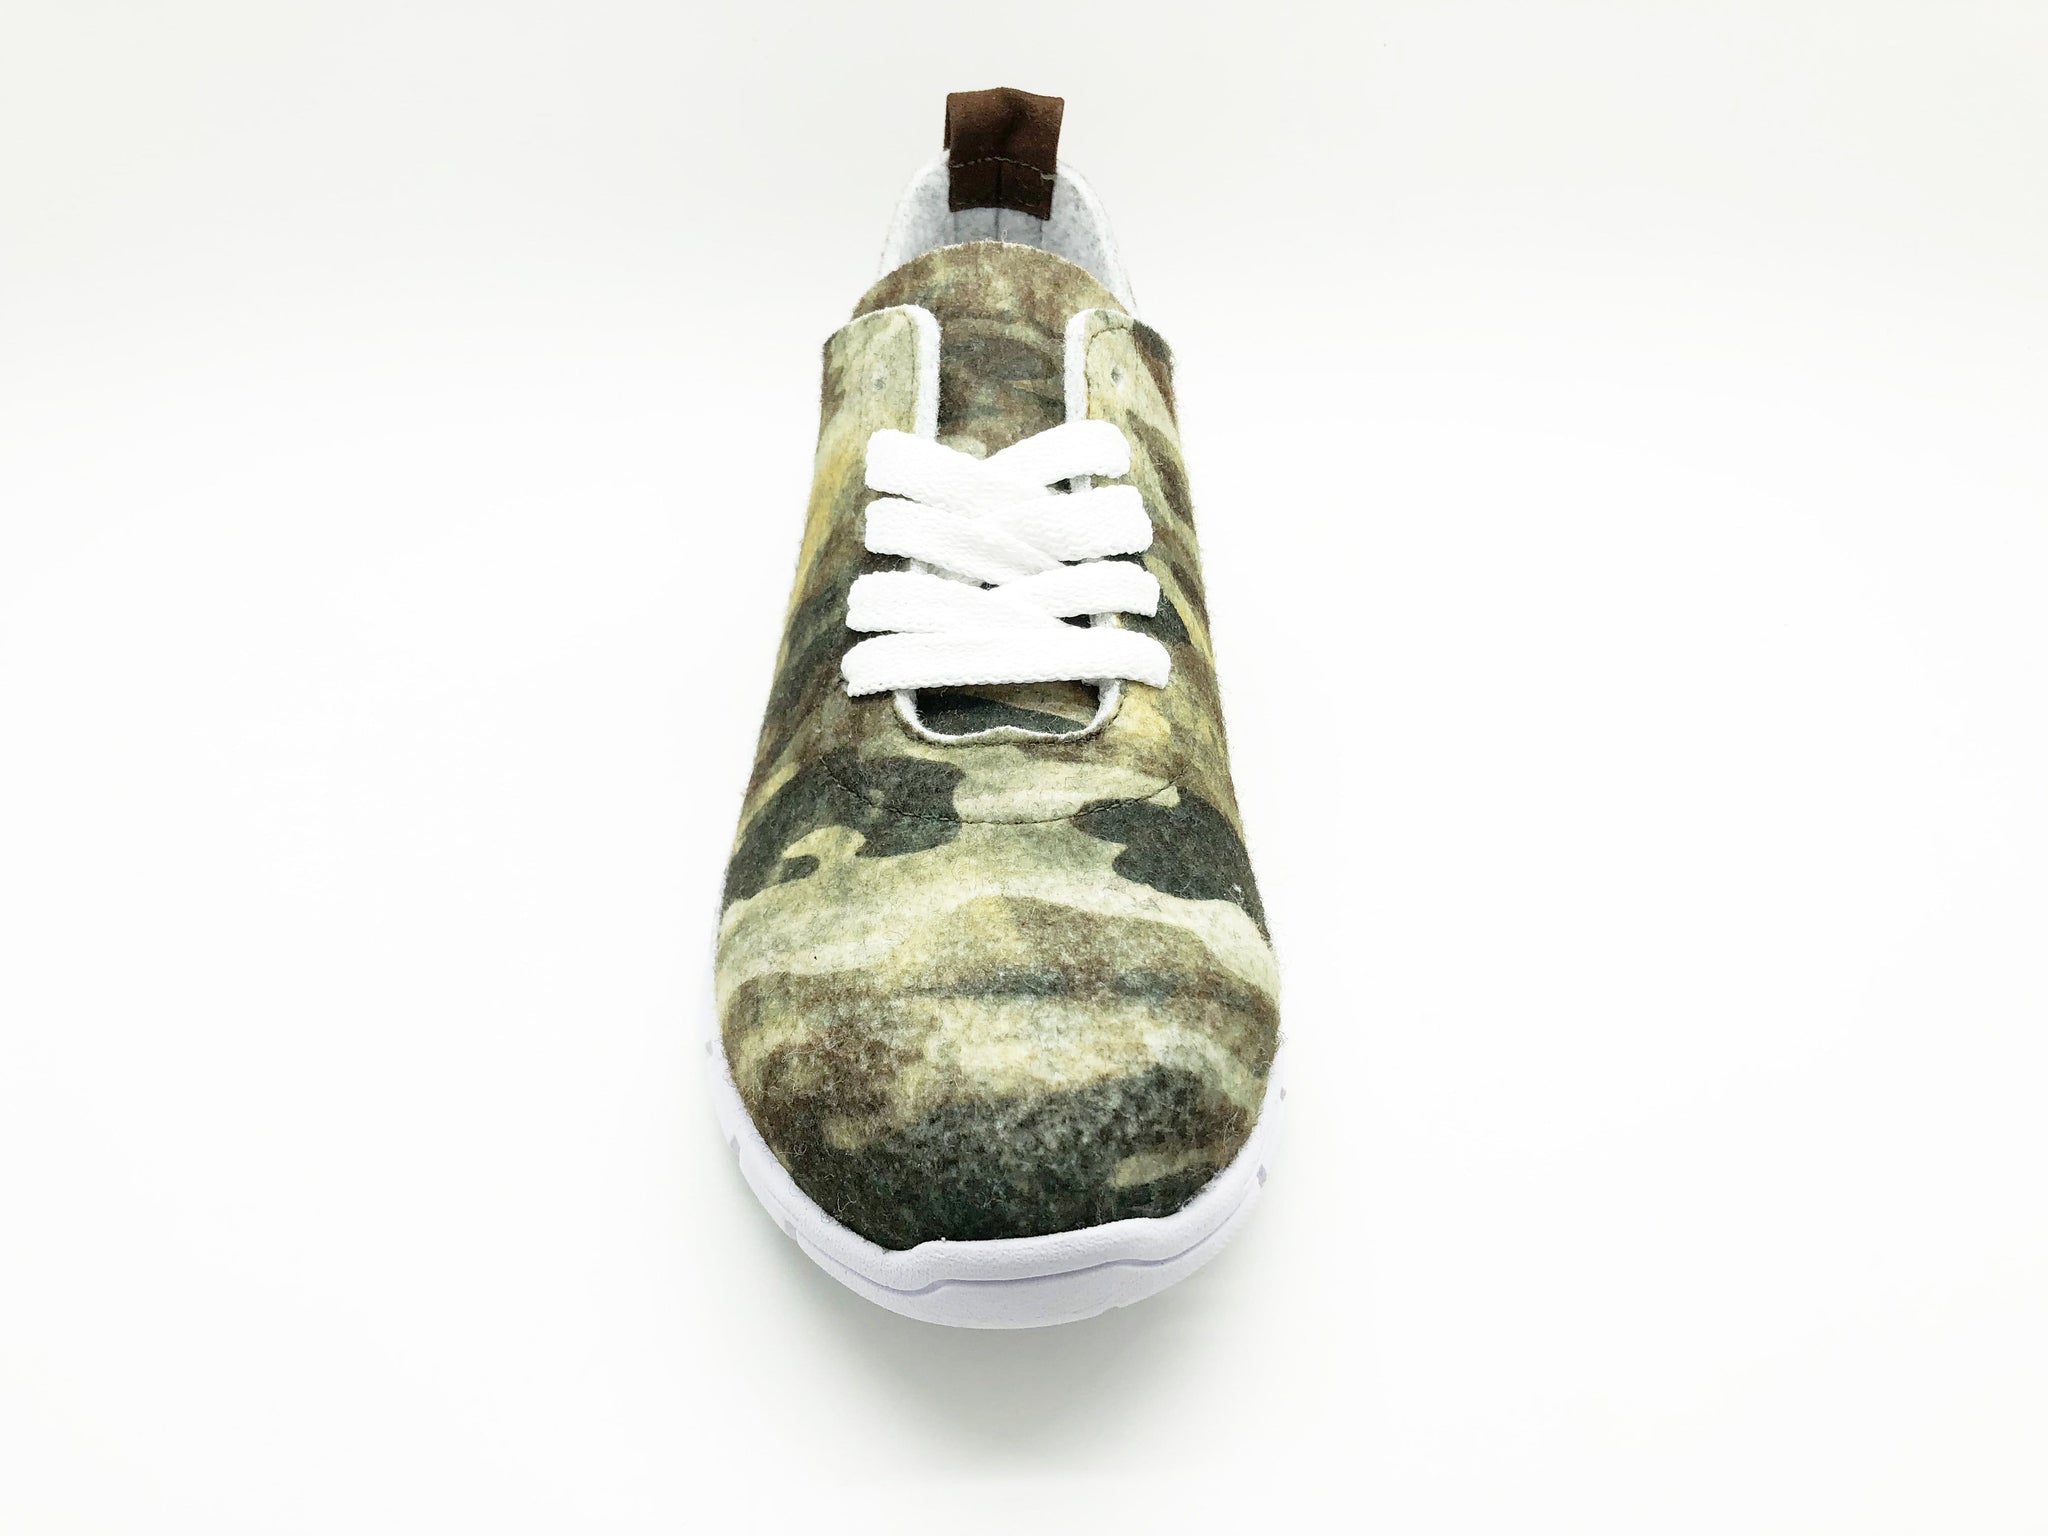 K&T Handels- und Unternehmensberatung GmbH sko PET Runner Sneaker i genbrugte PET-flasker. bæredygtig modeetisk mode